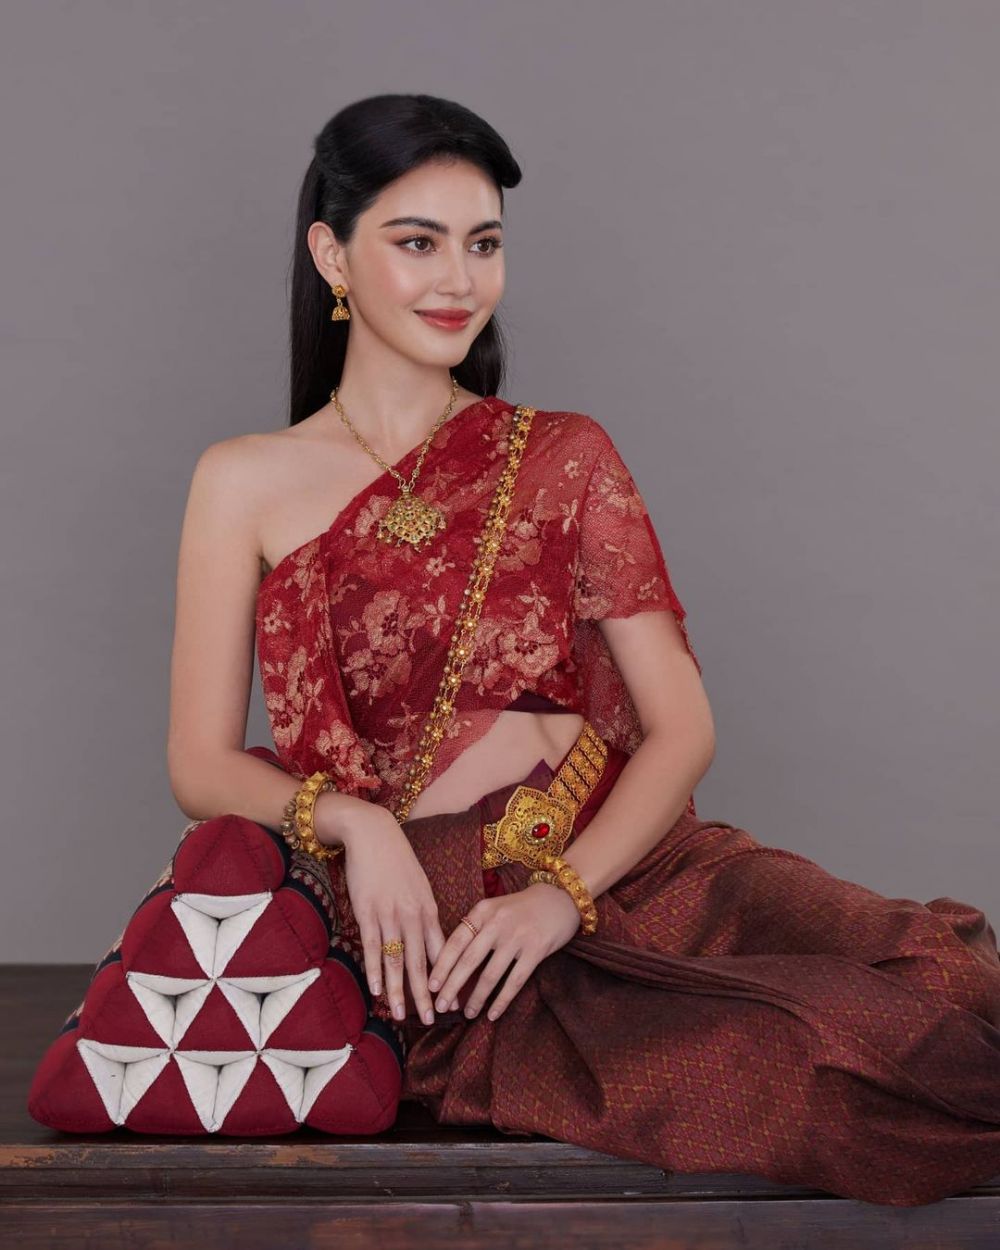 Potret 9 seleb Thailand pakai baju tradisional Chut Thai, anggun